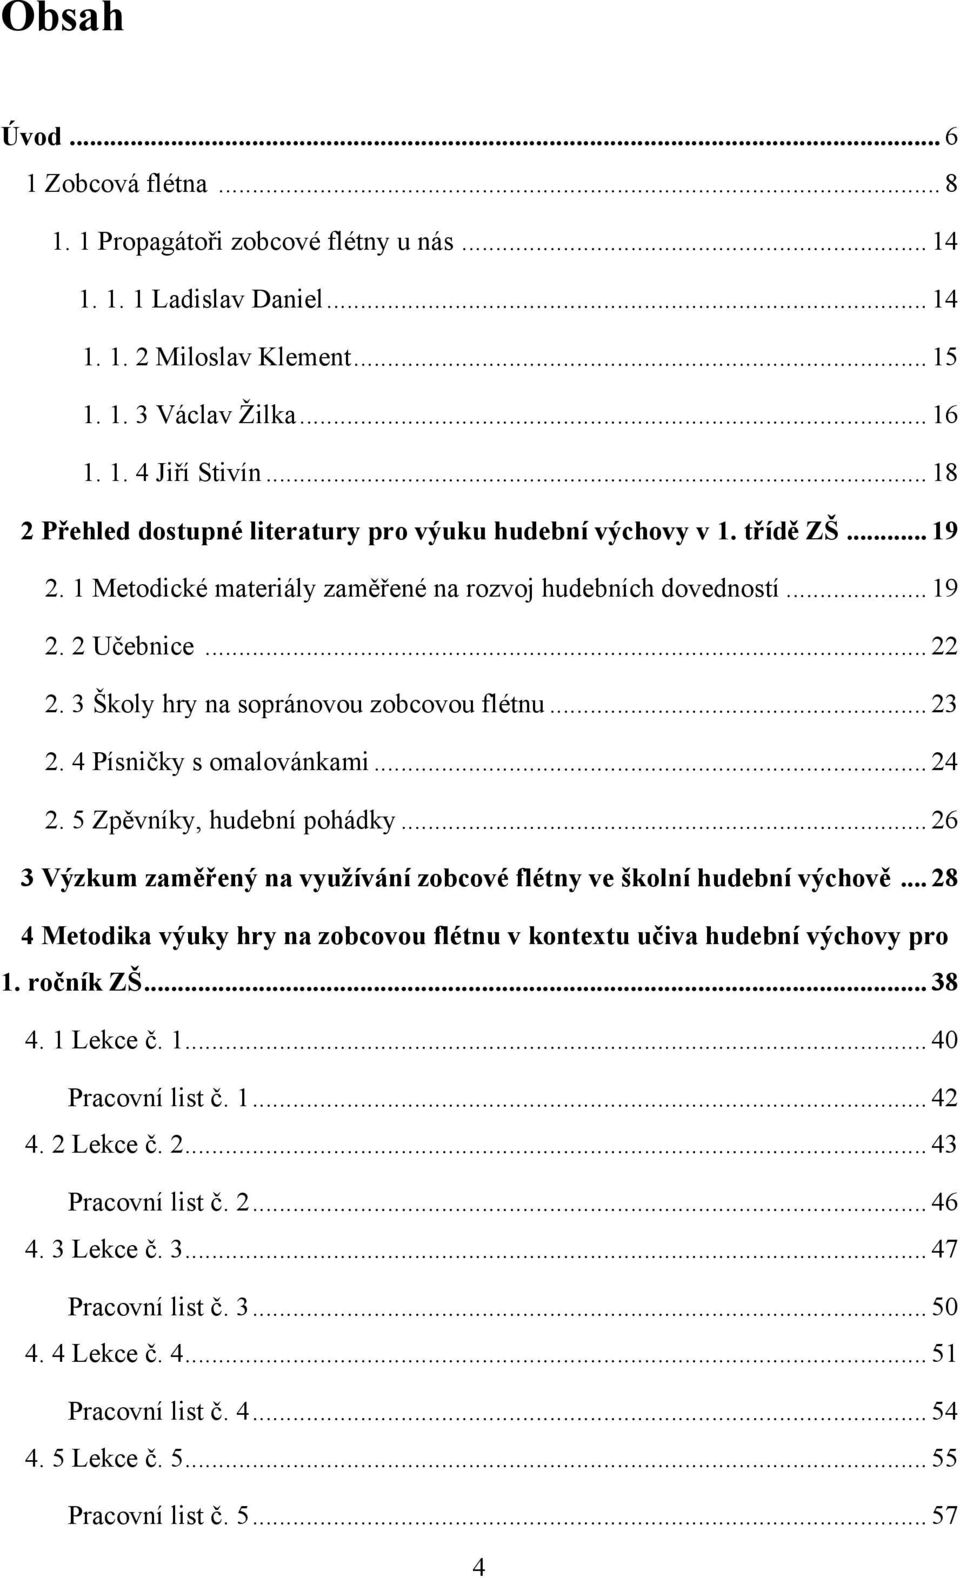 MASARYKOVA UNIVERZITA V BRNĚ - PDF Free Download